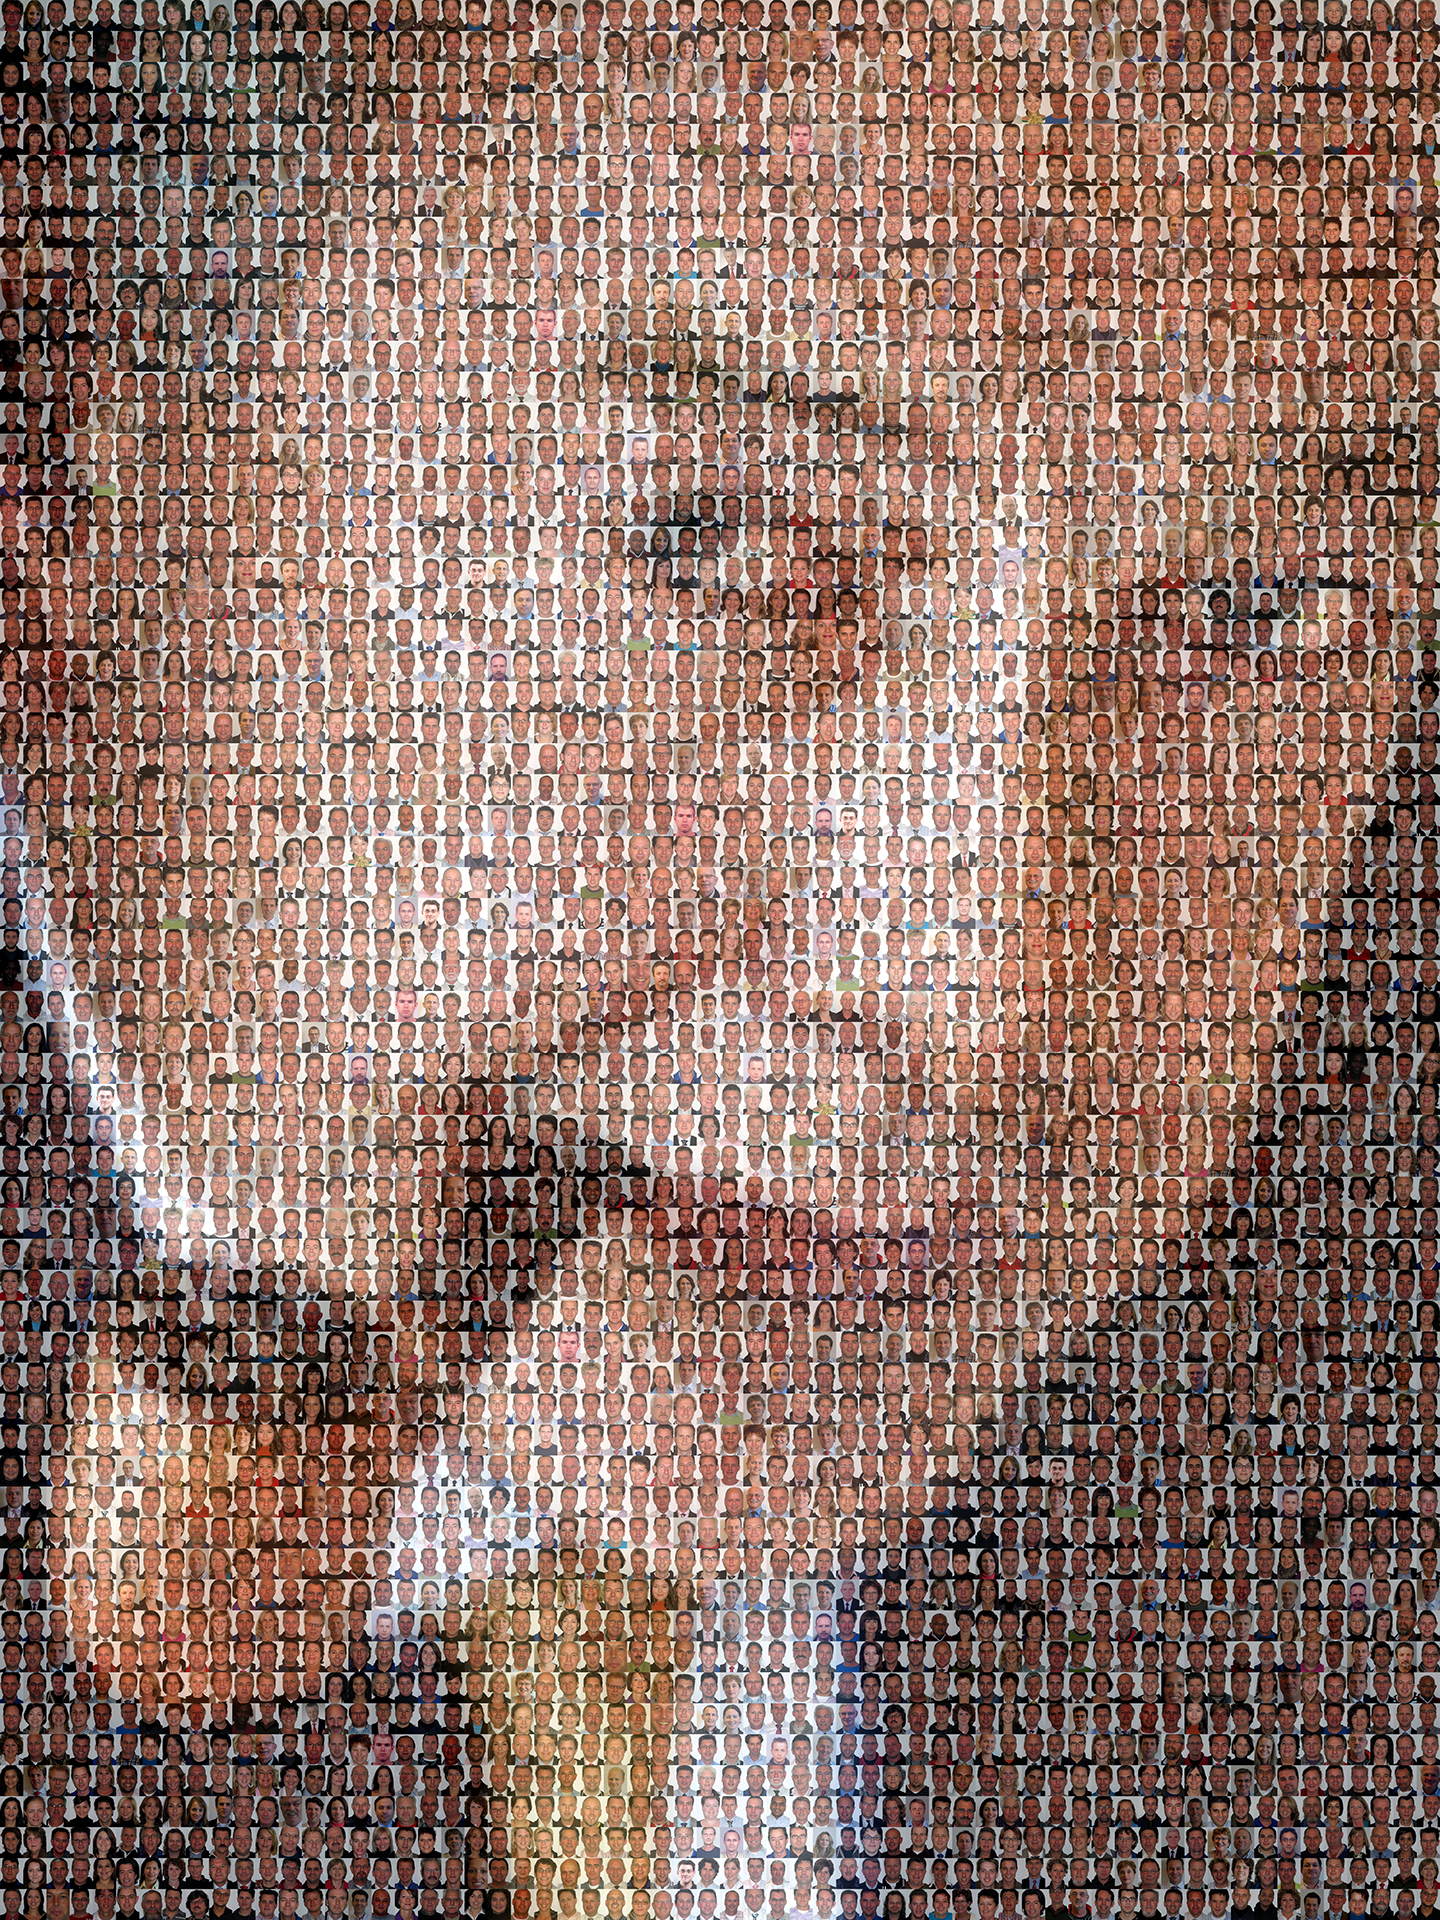 photo mosaic created using 639 business photos